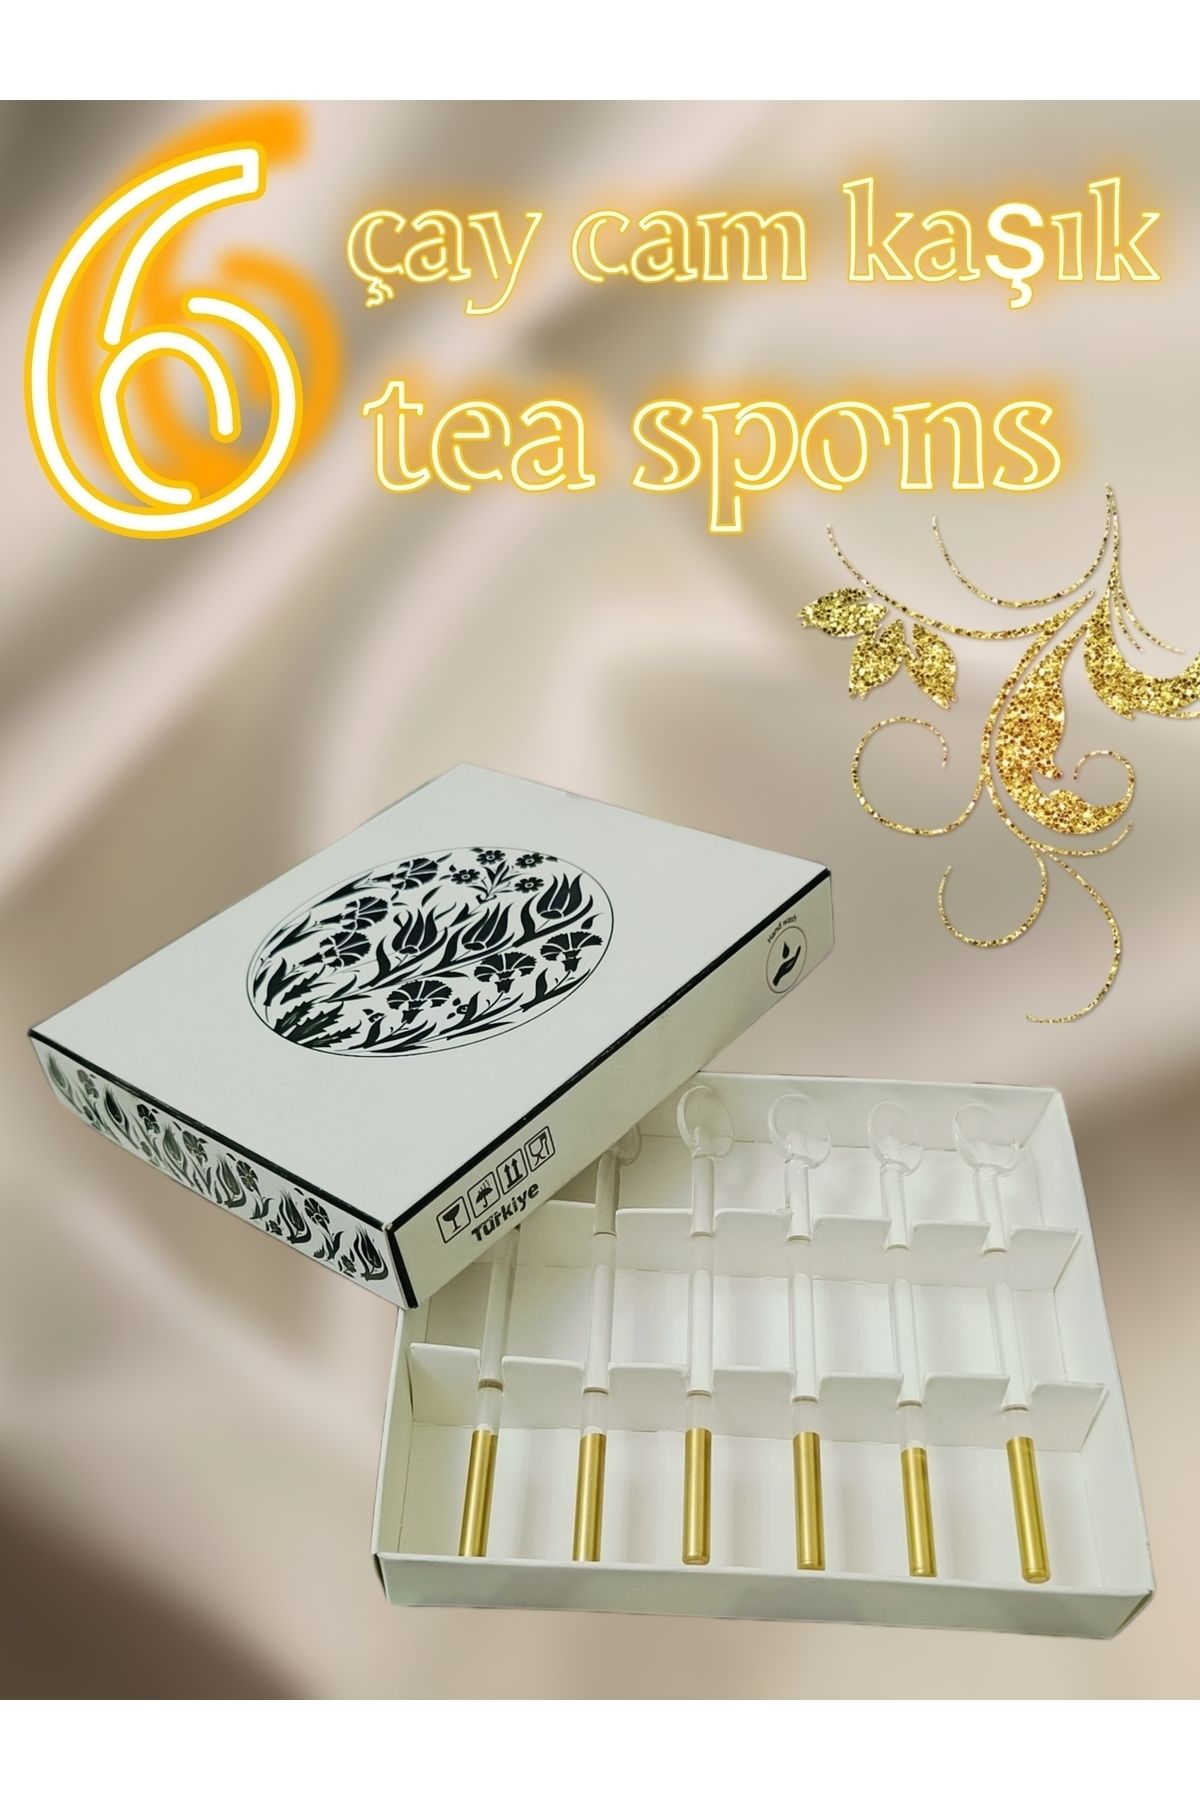 SAMSA Altın Işleme Cam Çay Kaşığı 6 Adet 6 Teaspoons